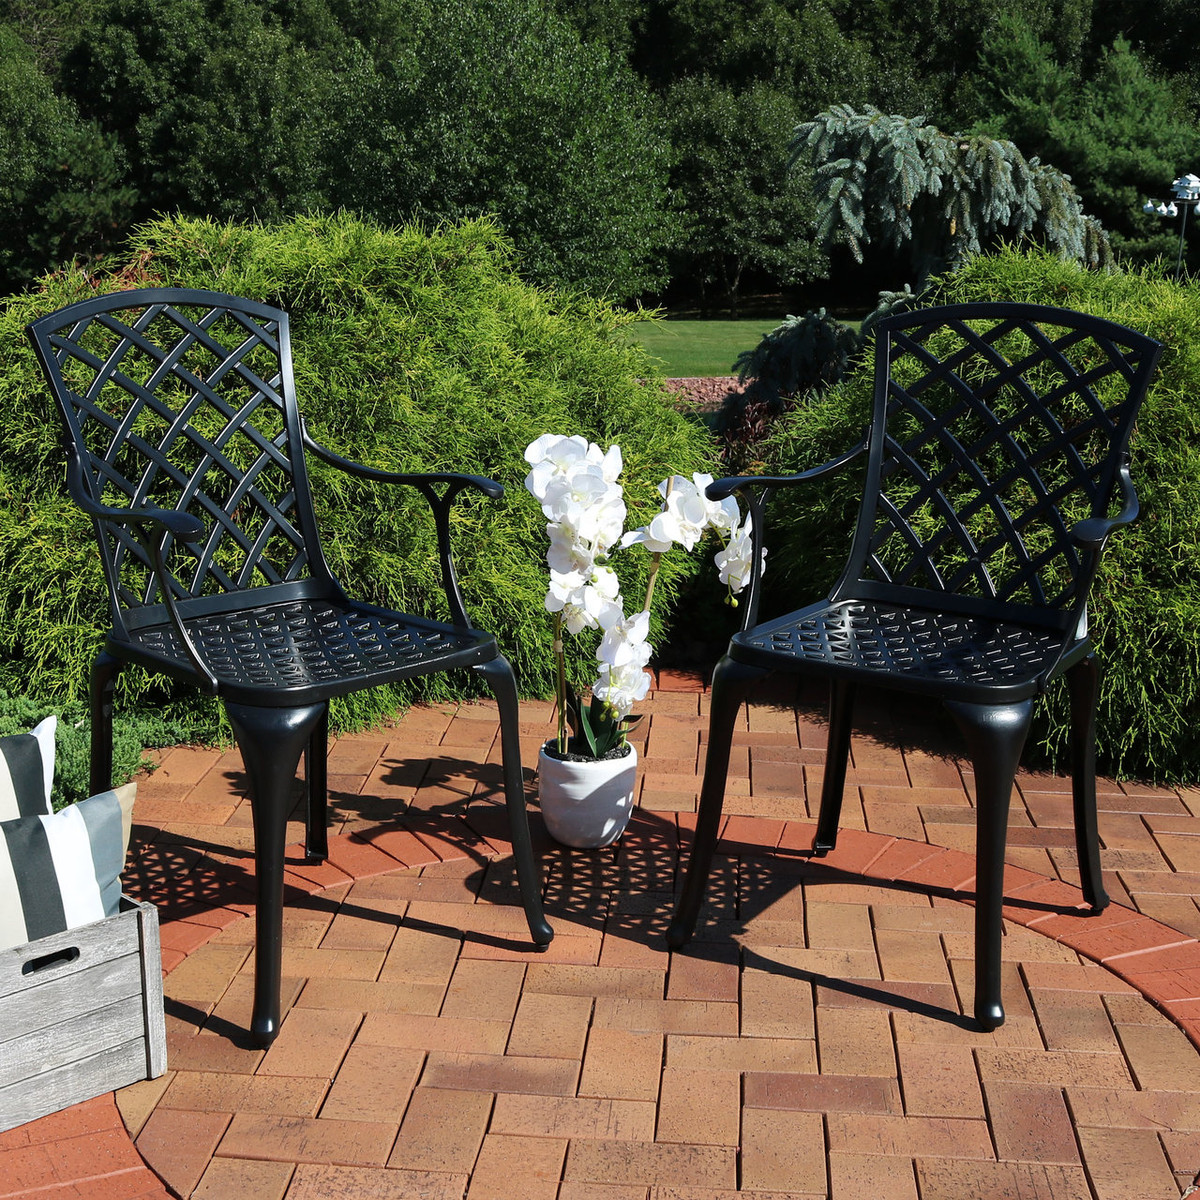 Sunnydaze Patio Chairs Set Of 2 Durable Cast Aluminum Construction With Crossweave Design